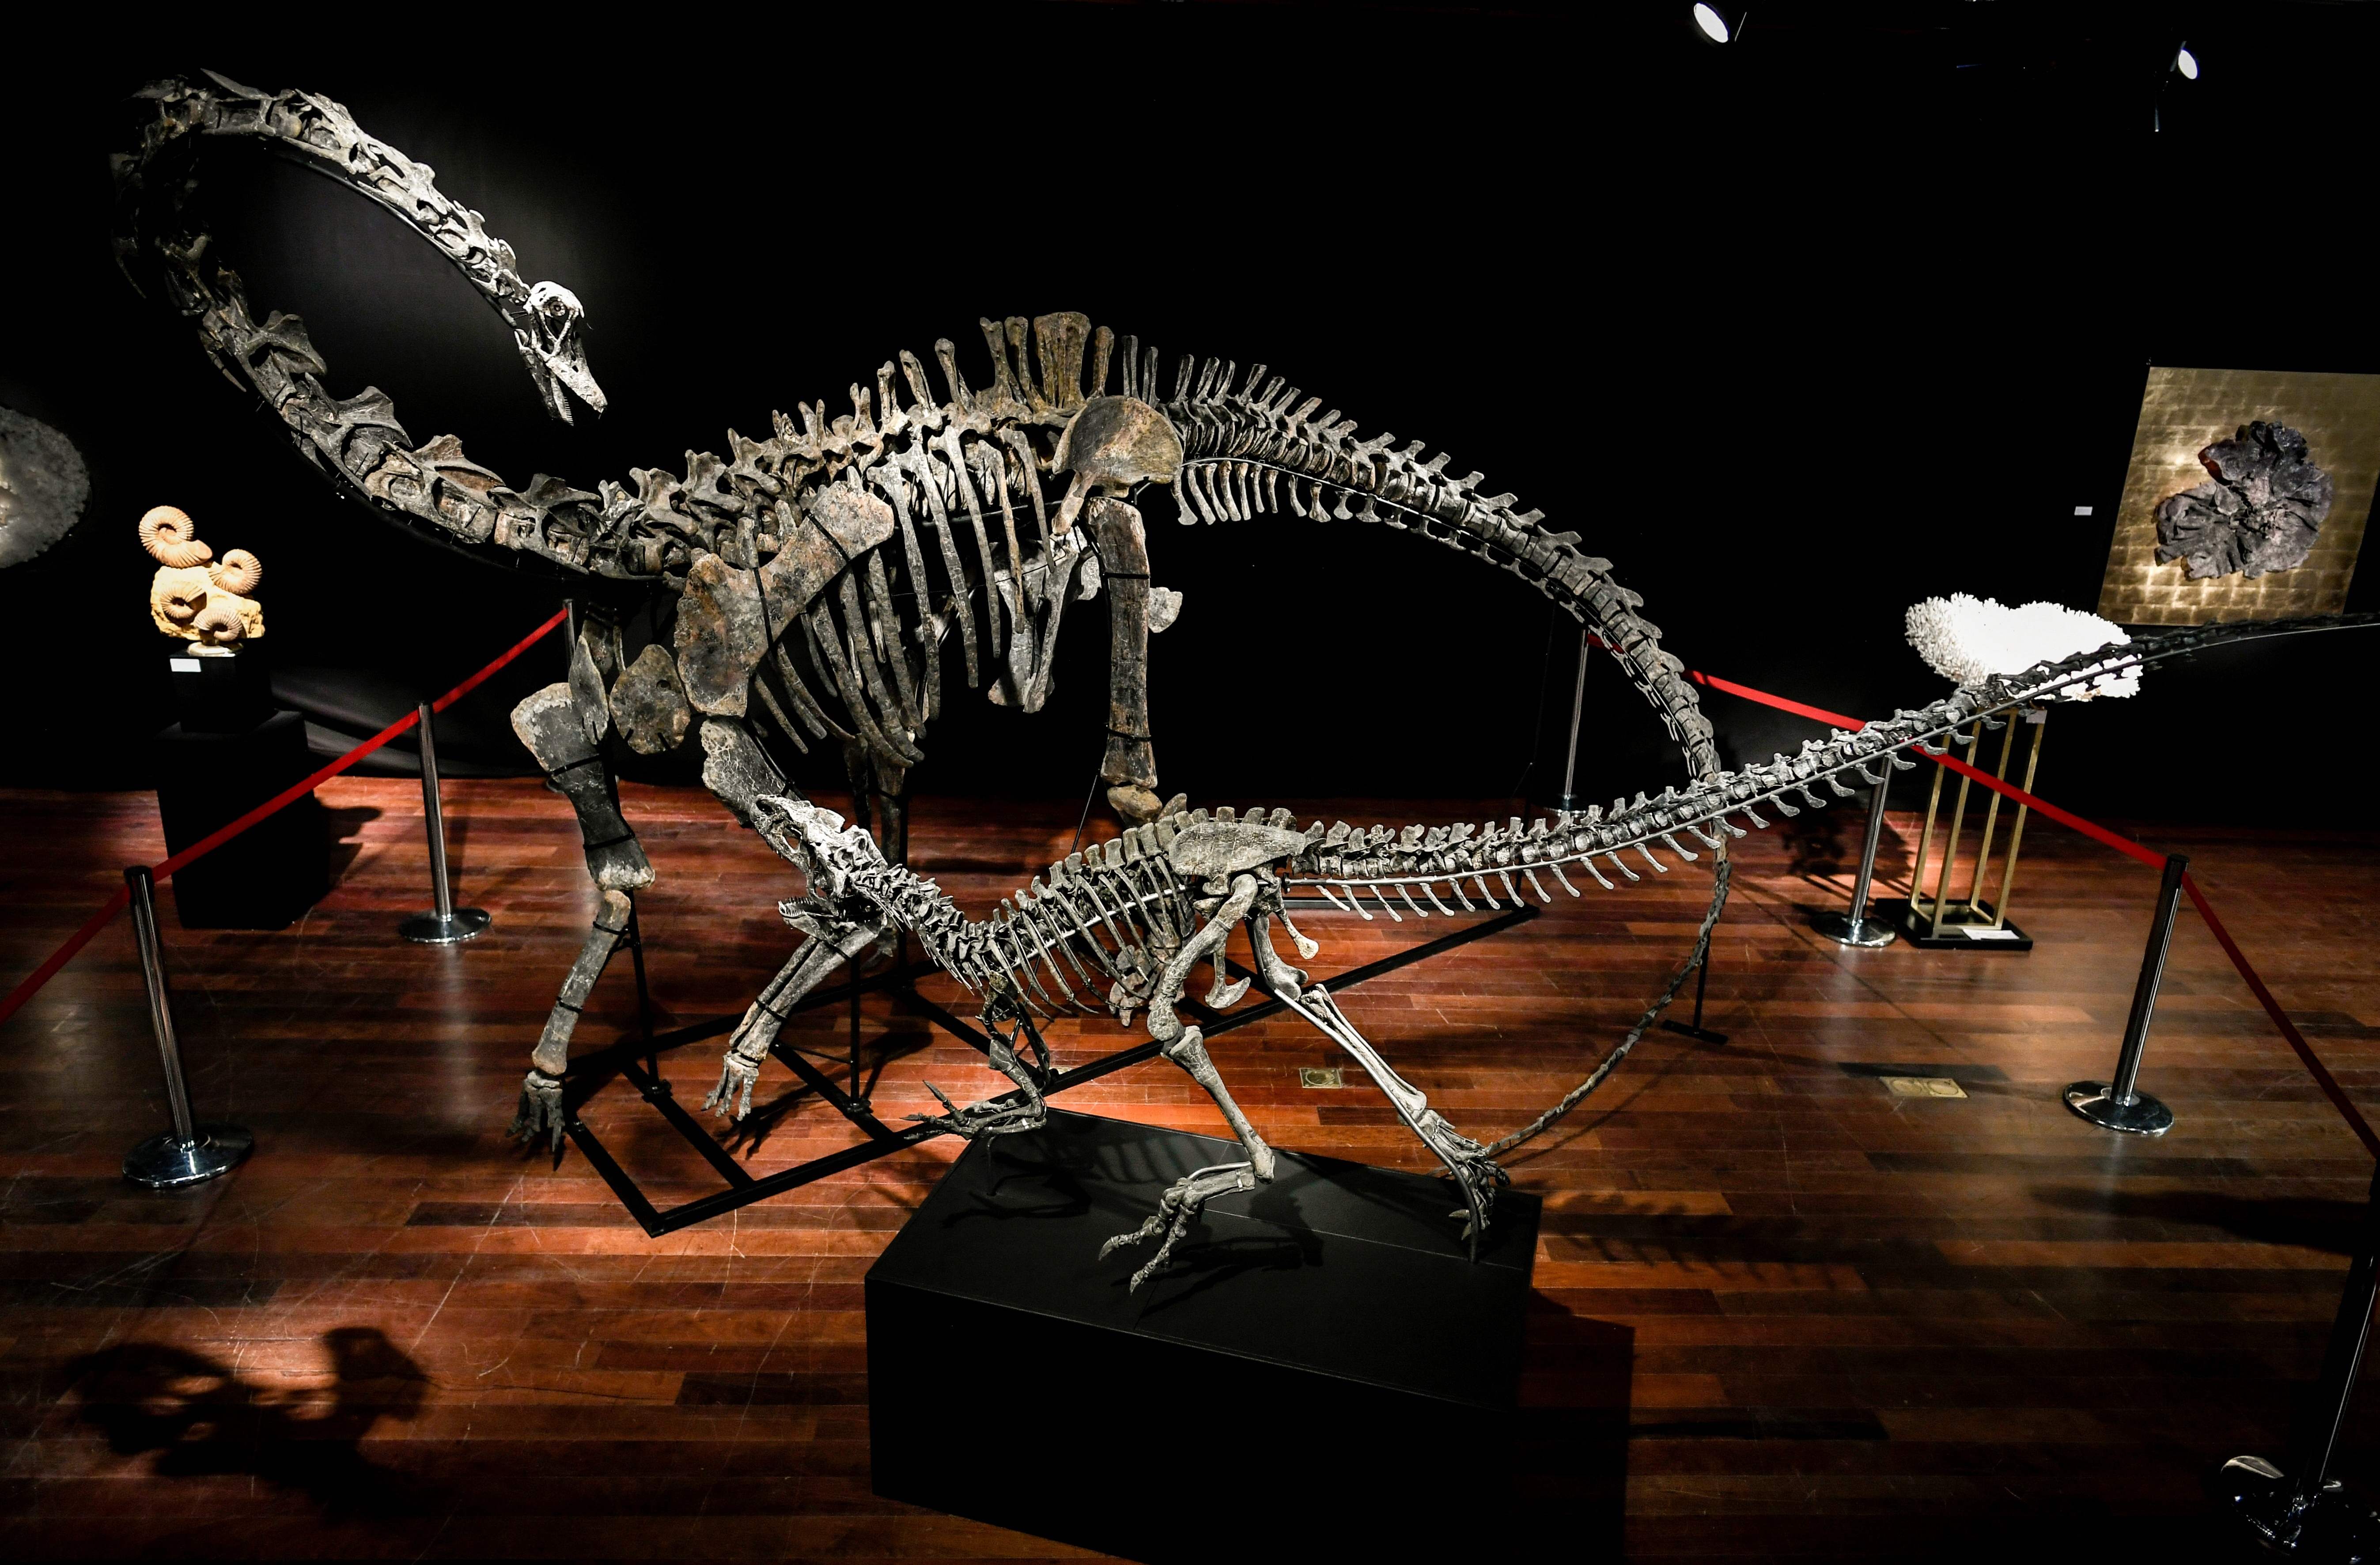 Crecen interesados en comprar esqueletos de dinosaurios | La Nación